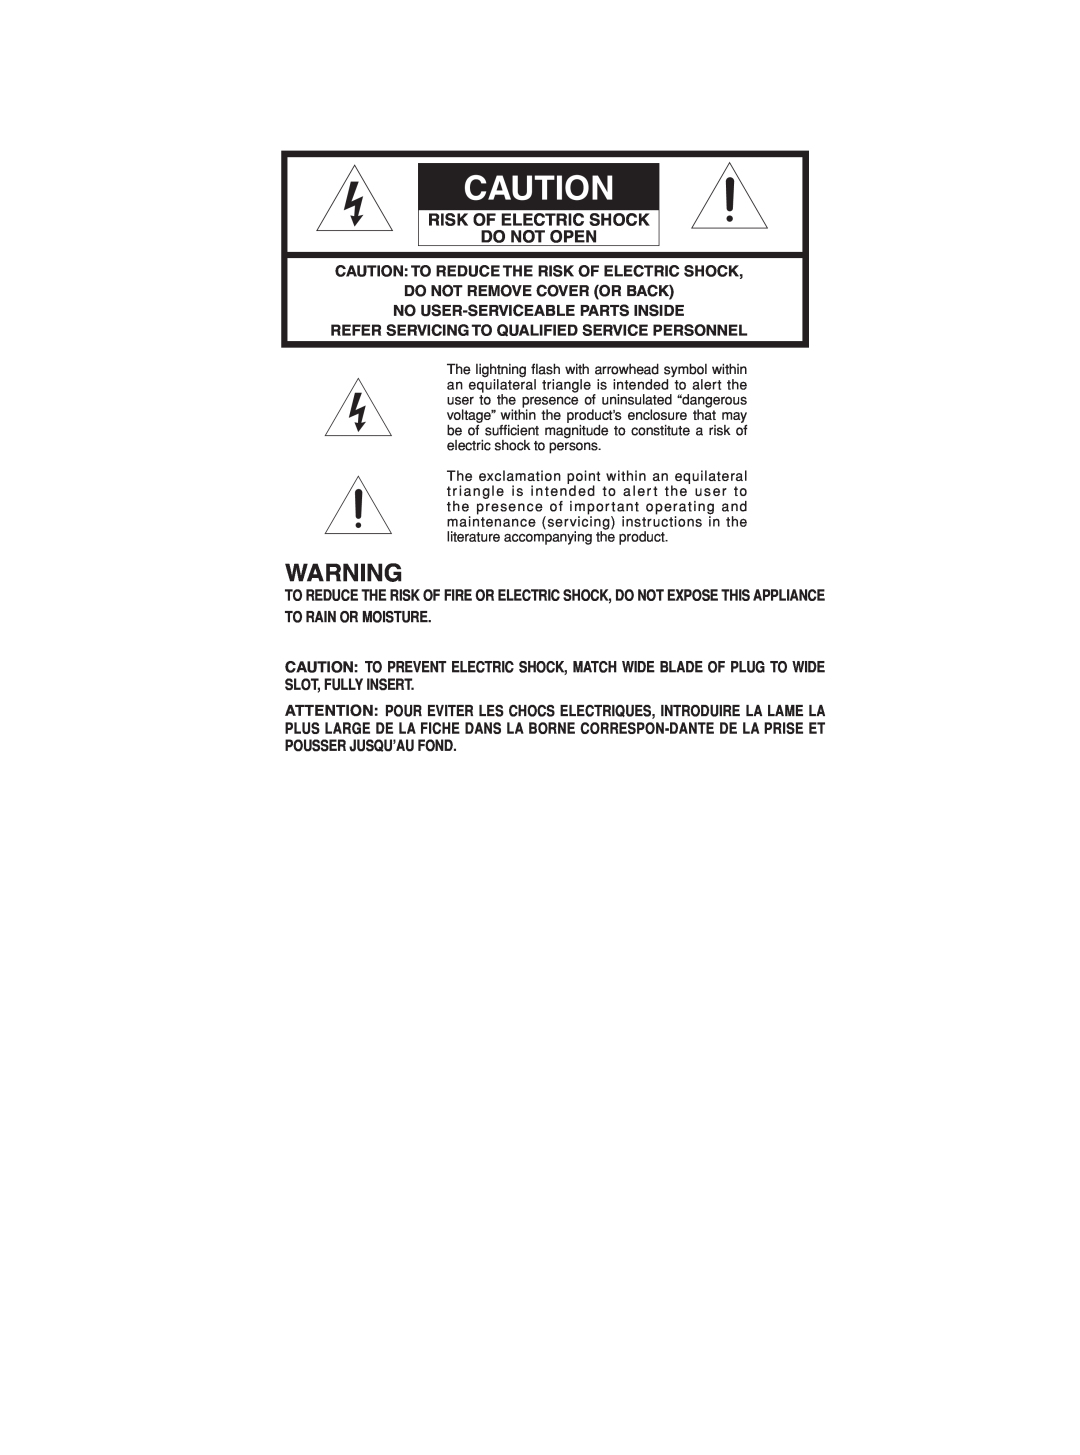 Marantz Model SC-11S1 manual Risk Of Electric Shock Do Not Open 